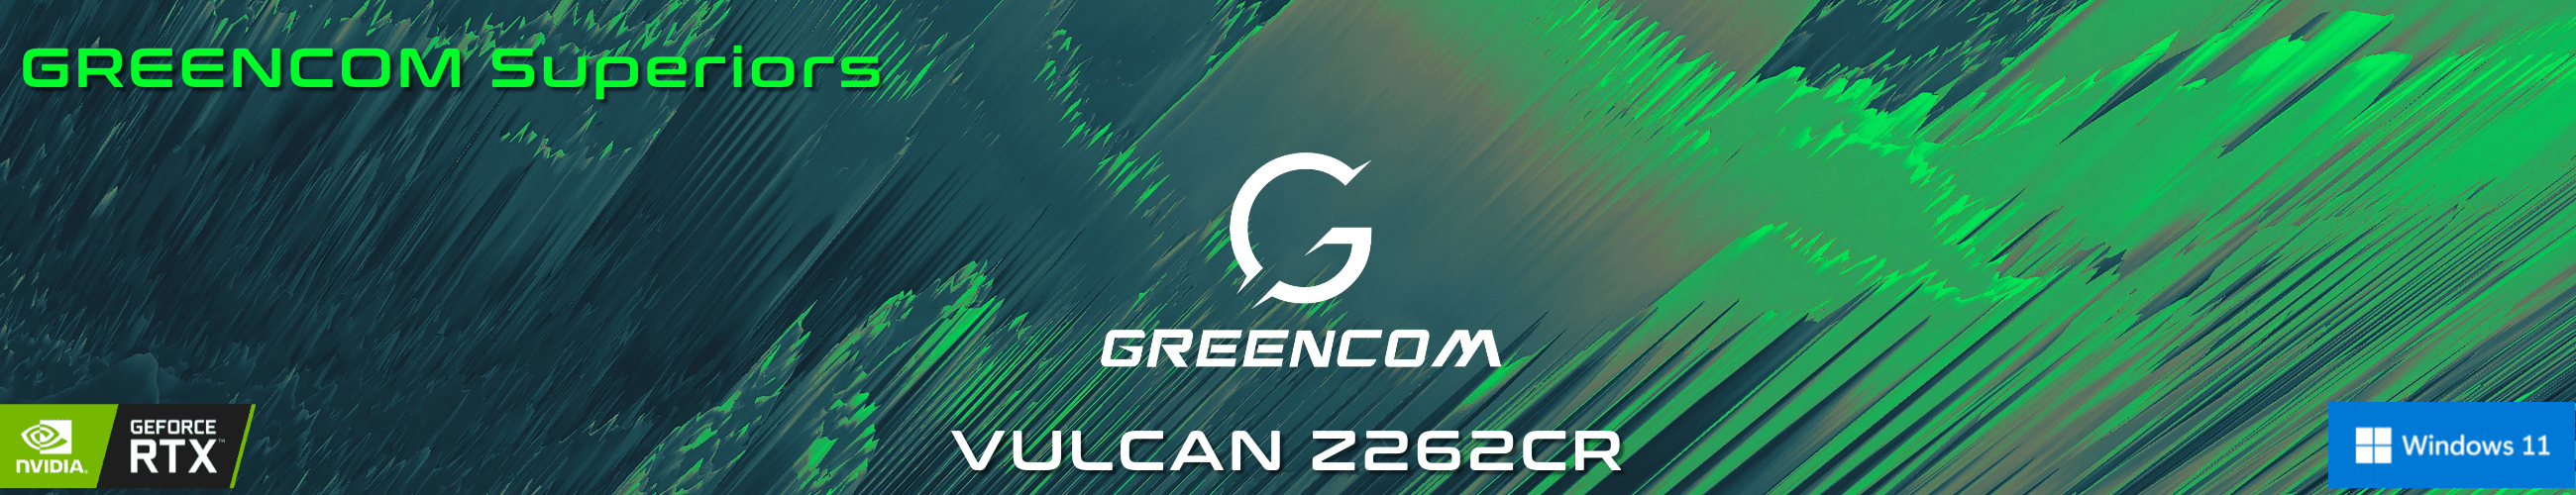 Greencom VULCAN Z262CR